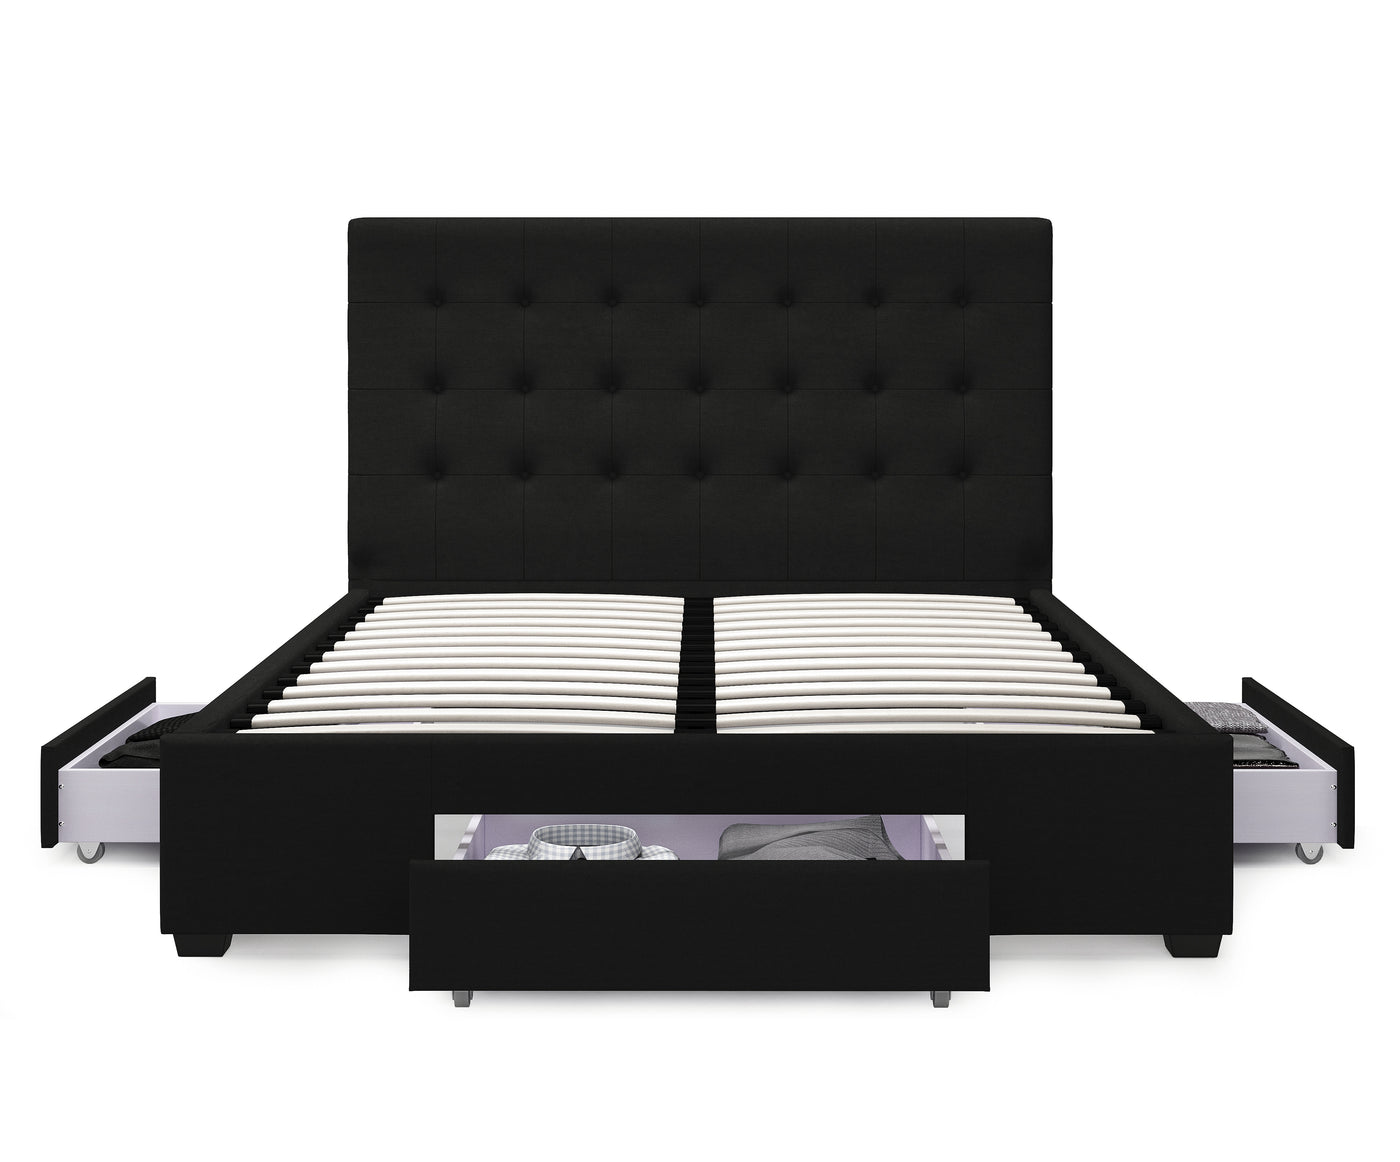 Kingston 3 Drawer Storage Bed Frame (Black Fabric) and Royal Memory Foam Plush Mattress Combo Deal (7811917218046)